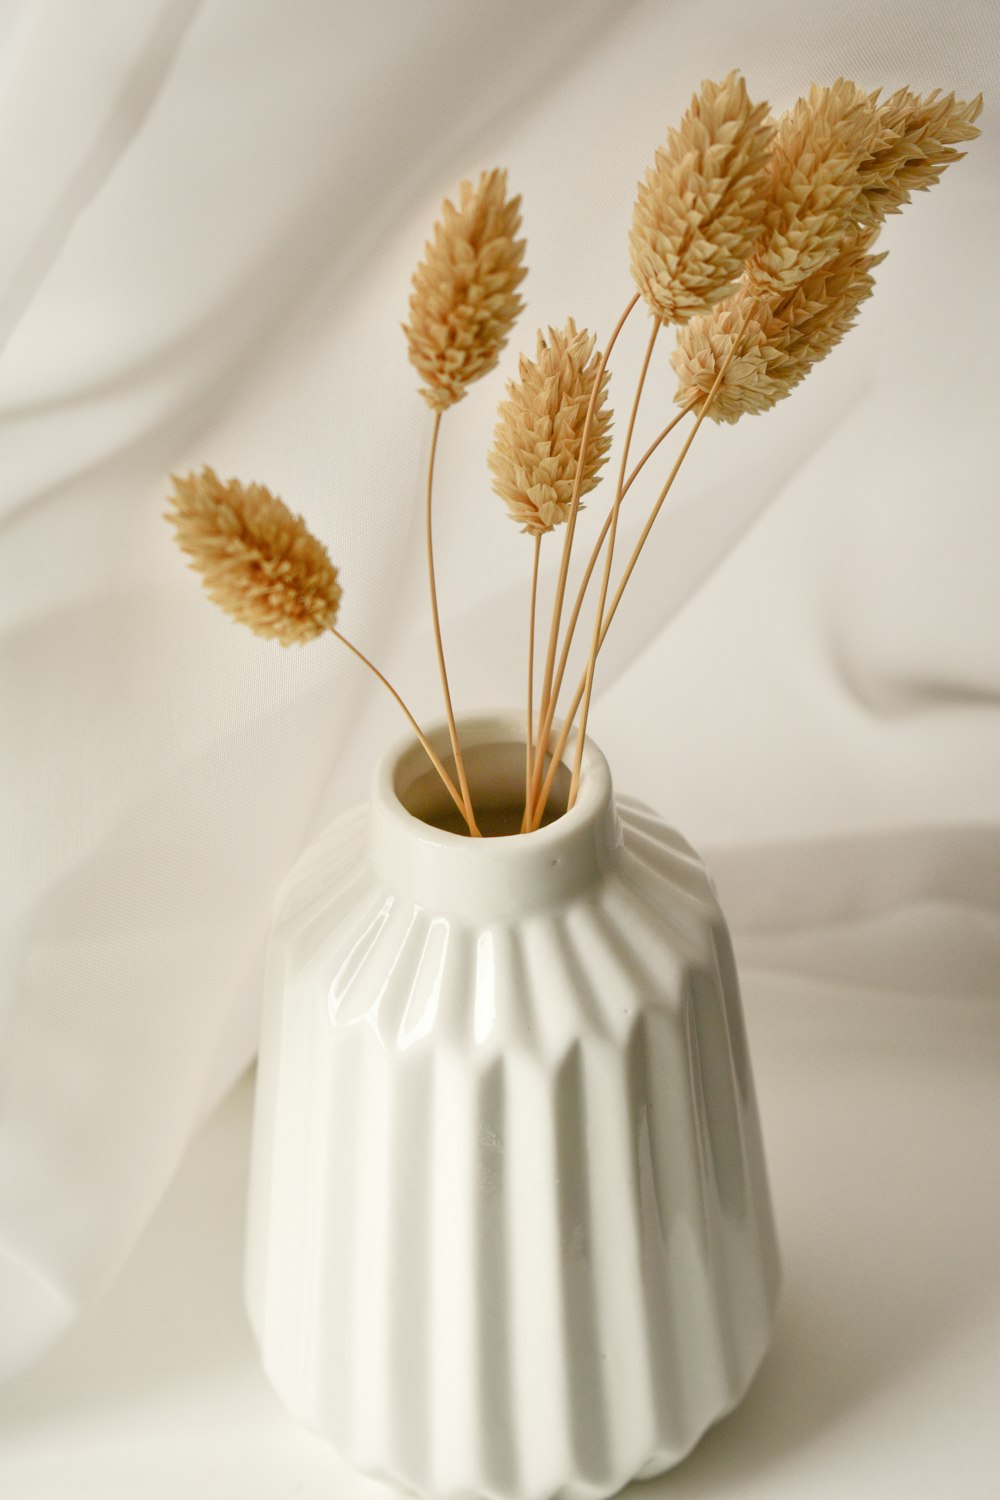 fiori marroni in vaso di ceramica bianca